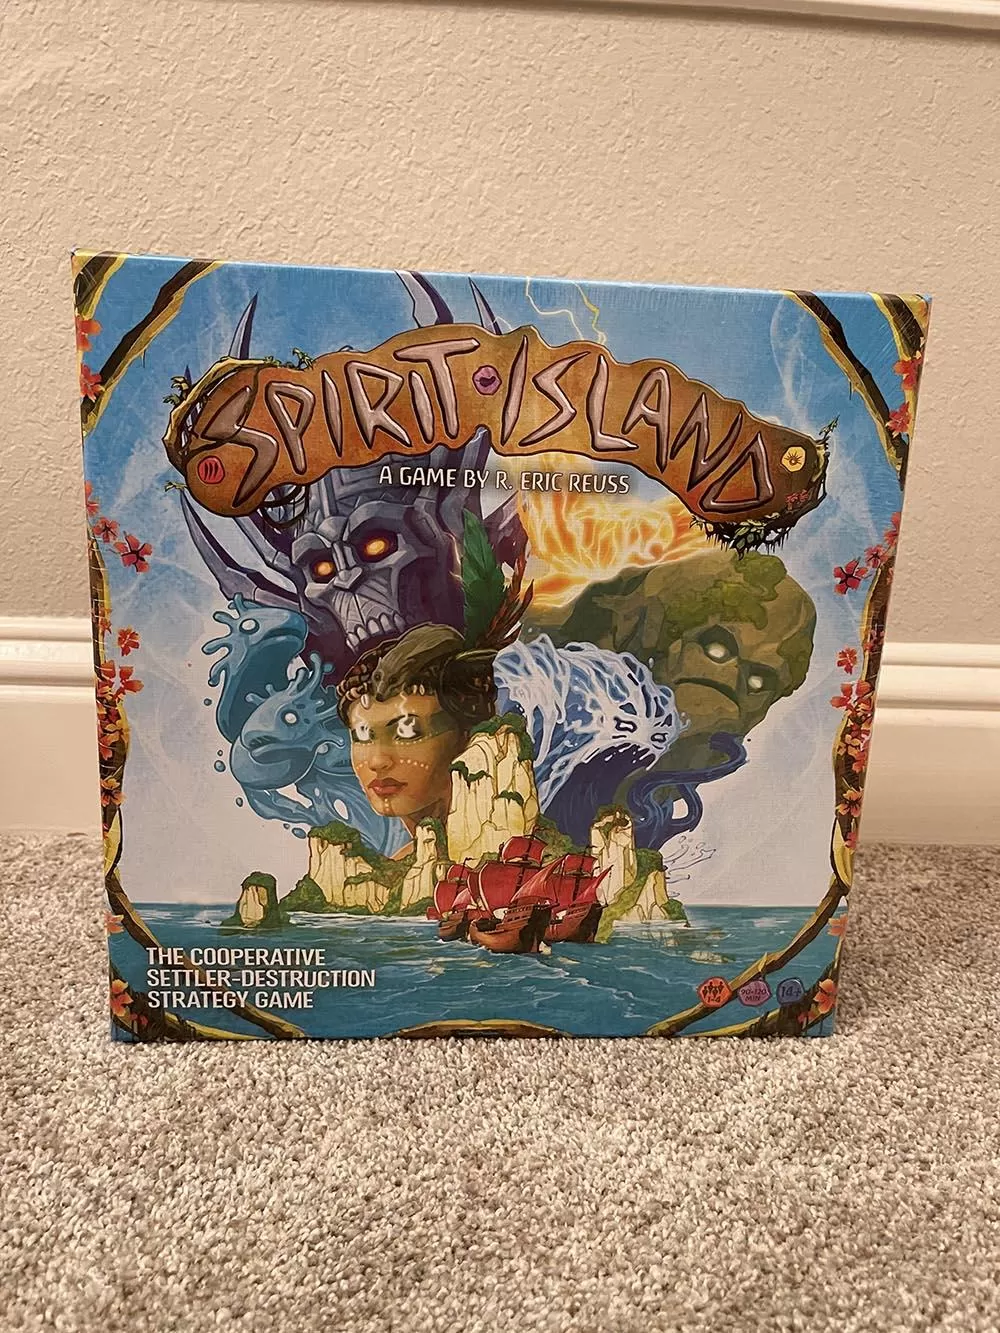 The Spirit Island board game box.